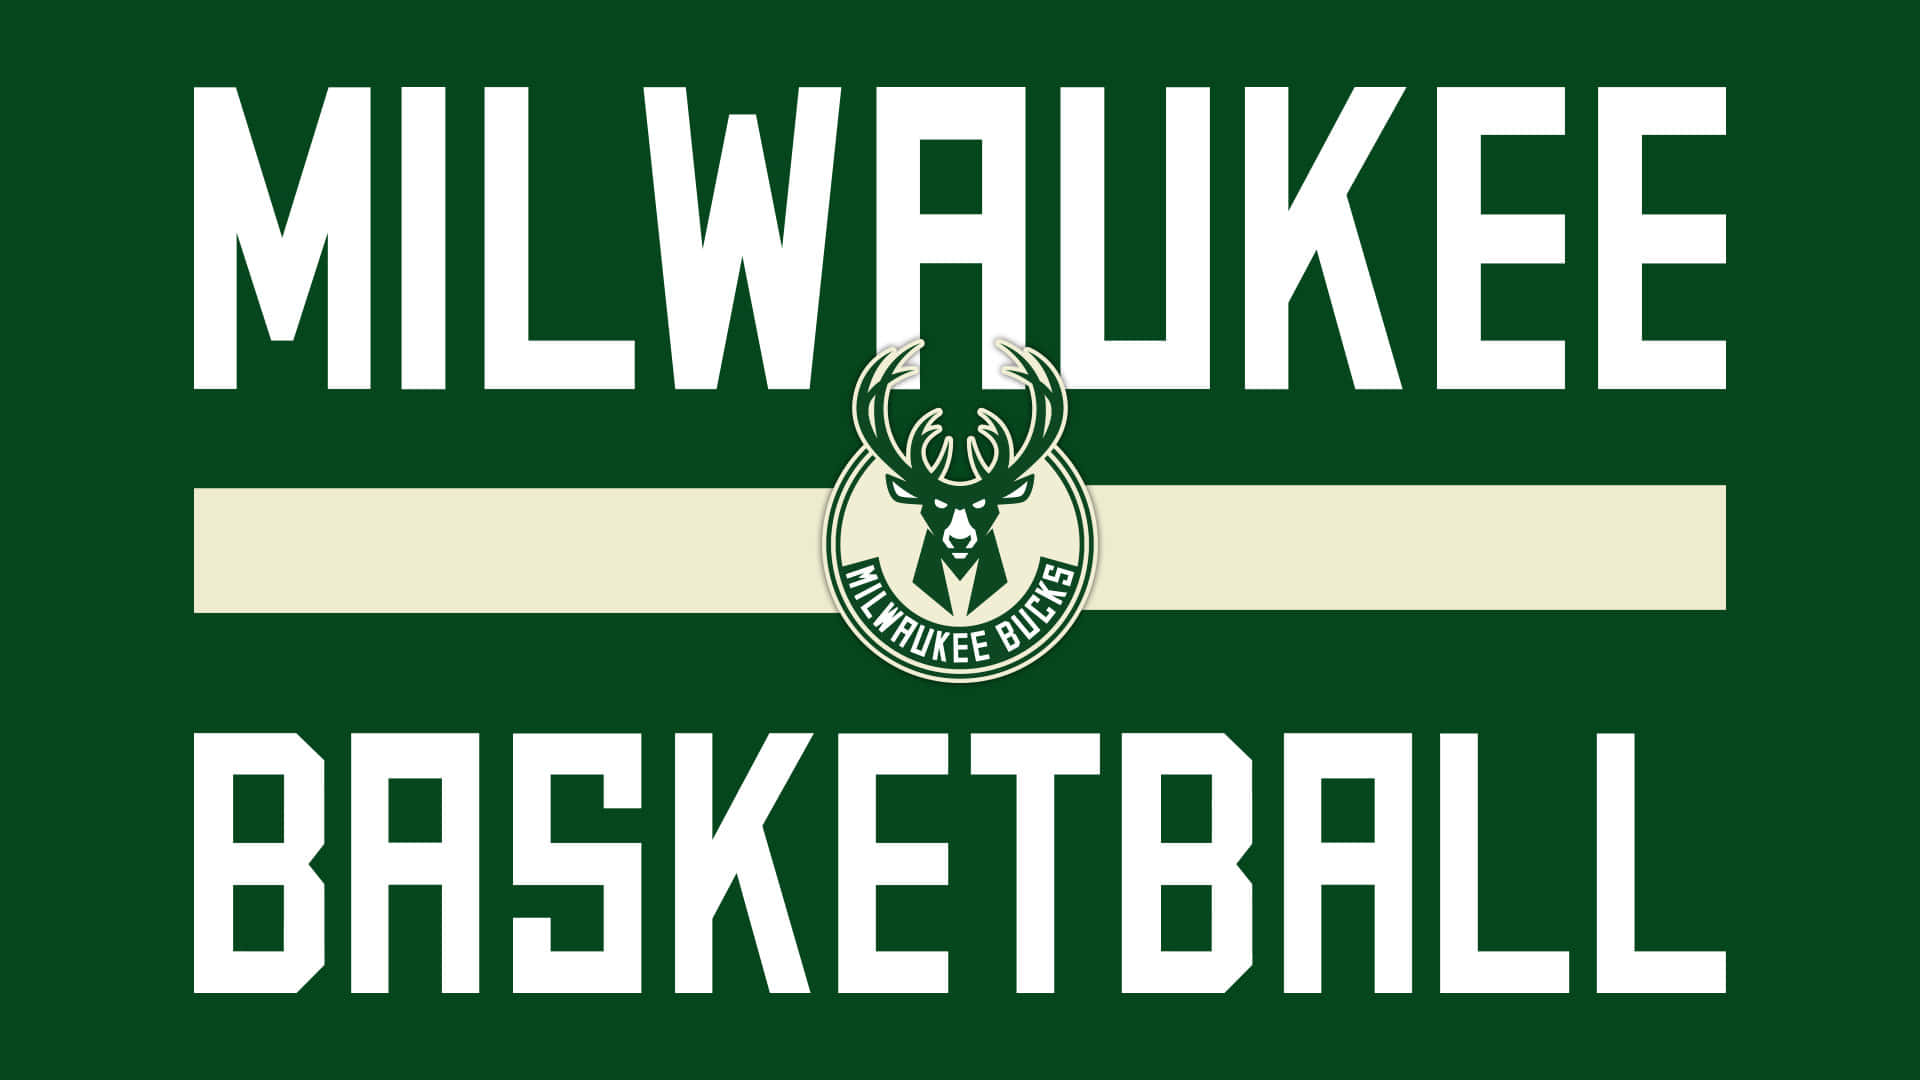 Ellogotipo Oficial De Los Milwaukee Bucks. Fondo de pantalla